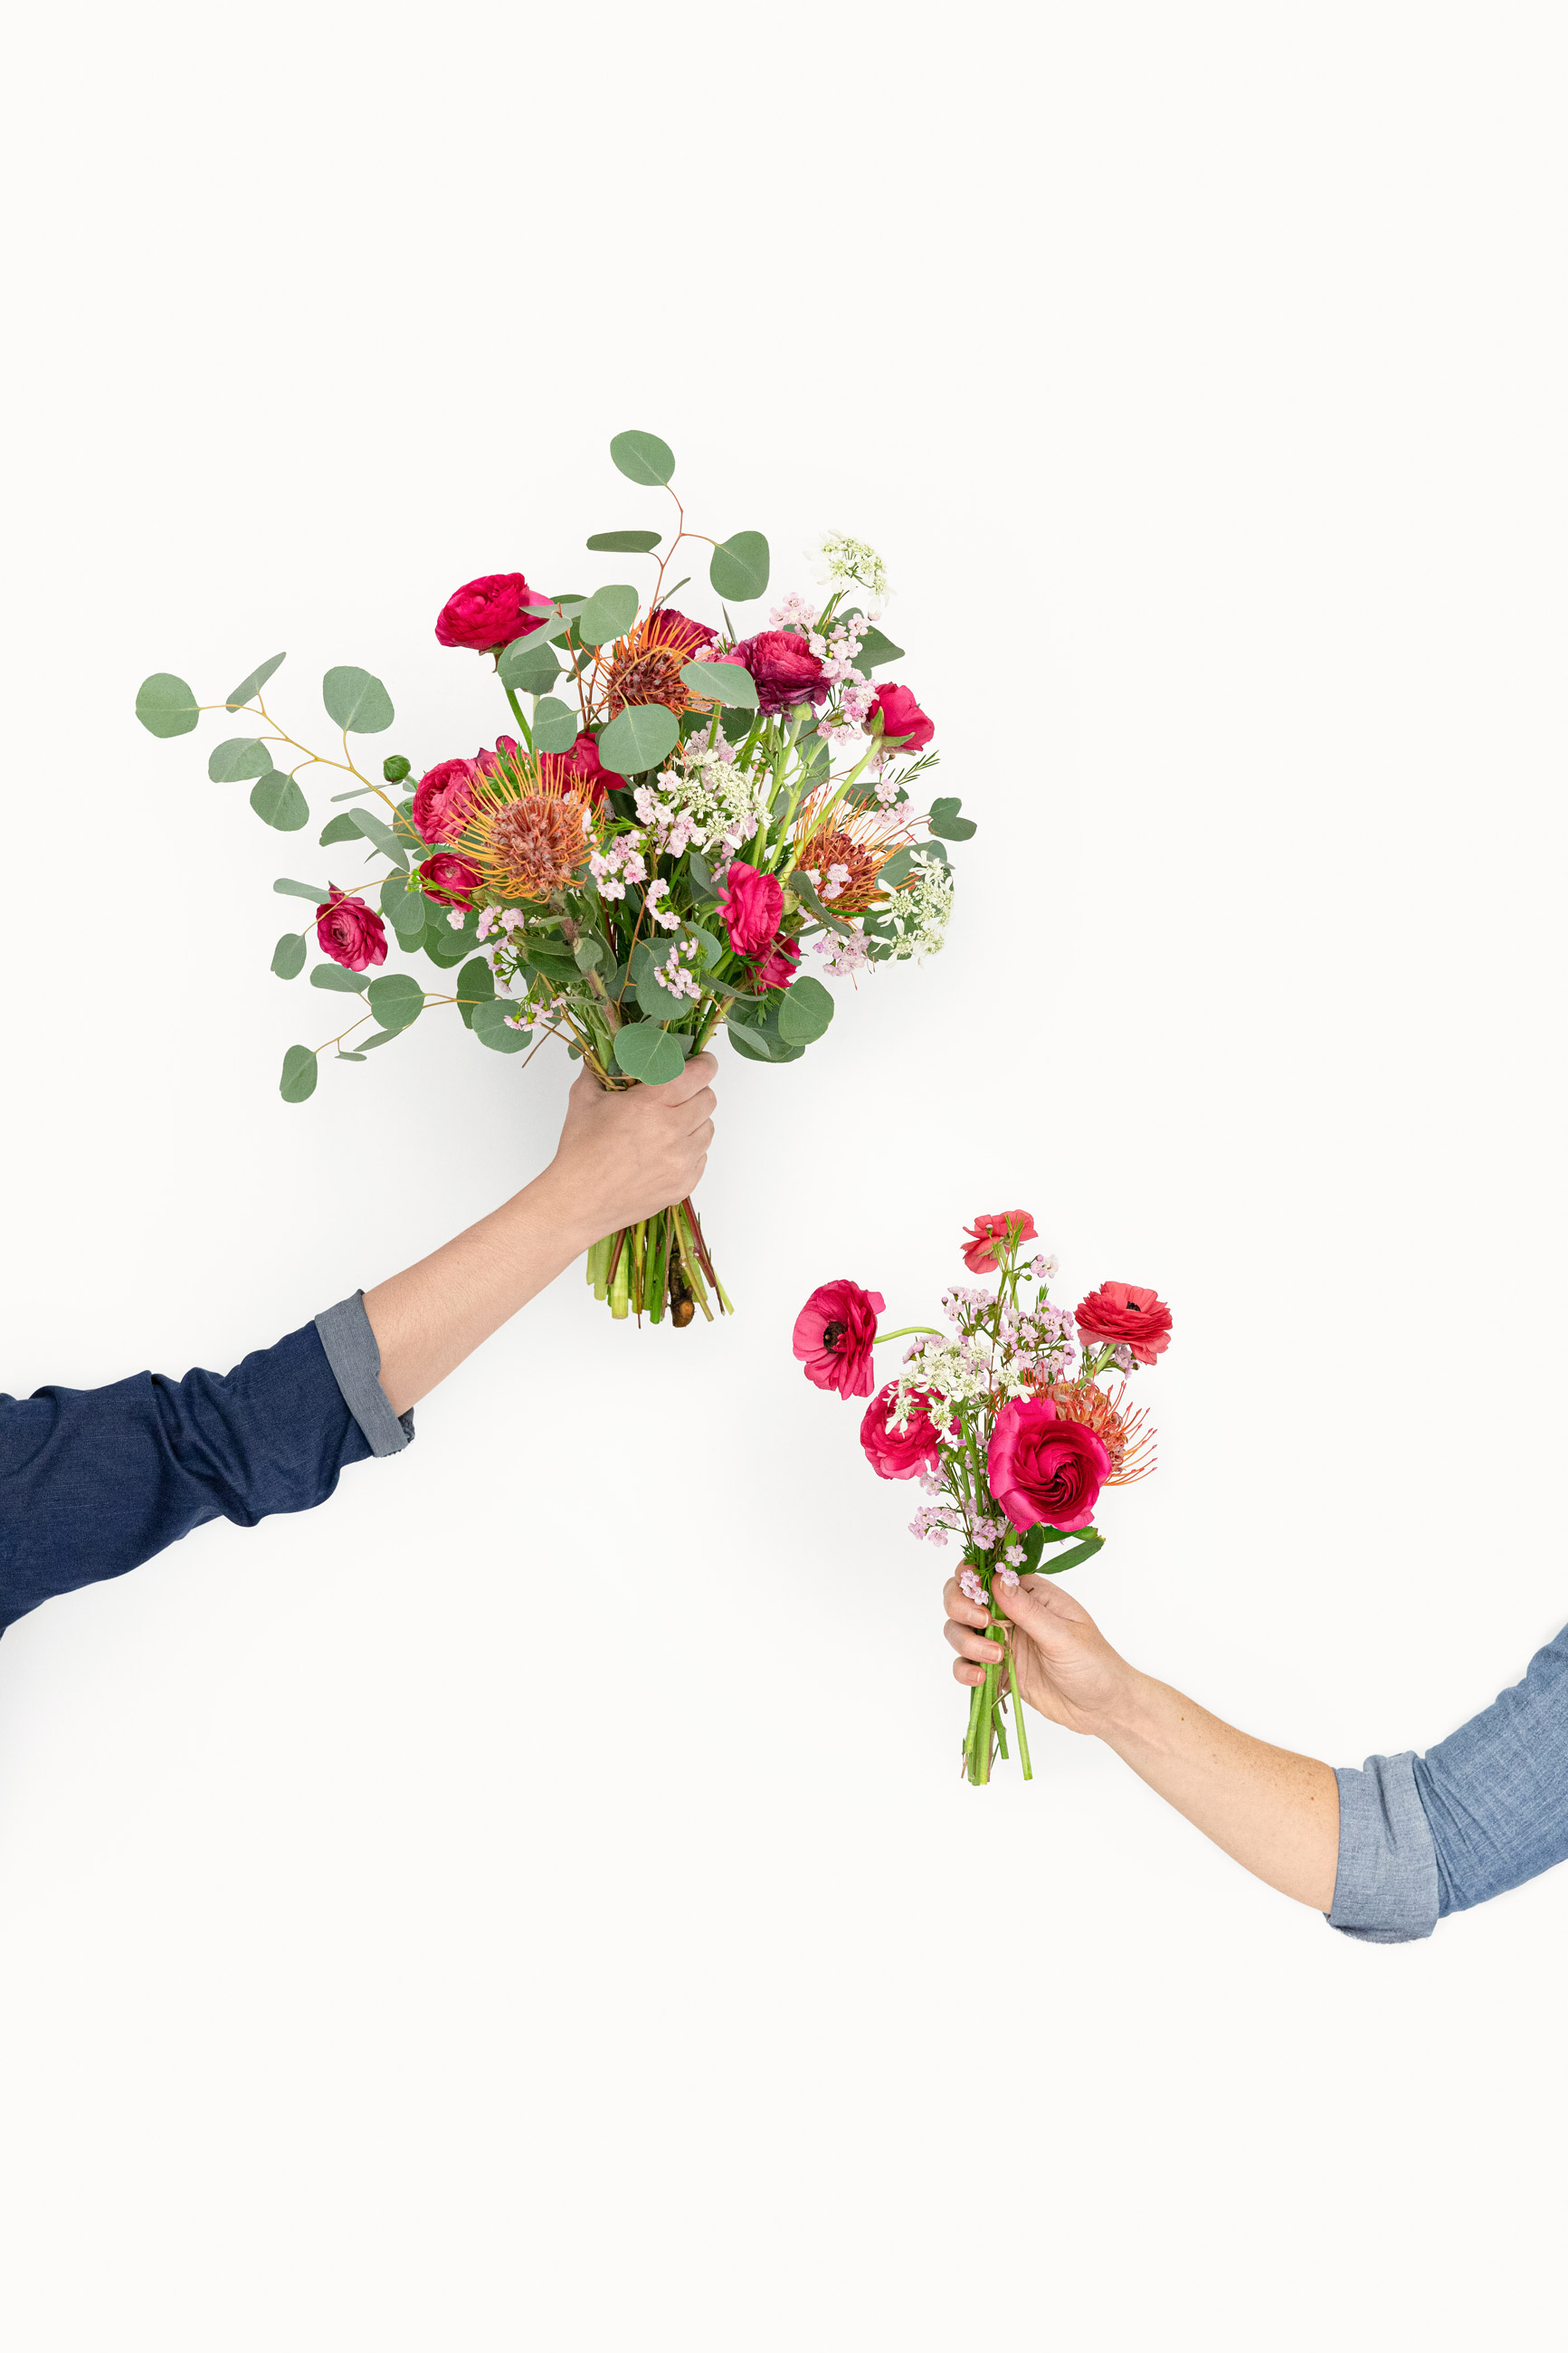 Hands holding flowers vibrant flower arrangements